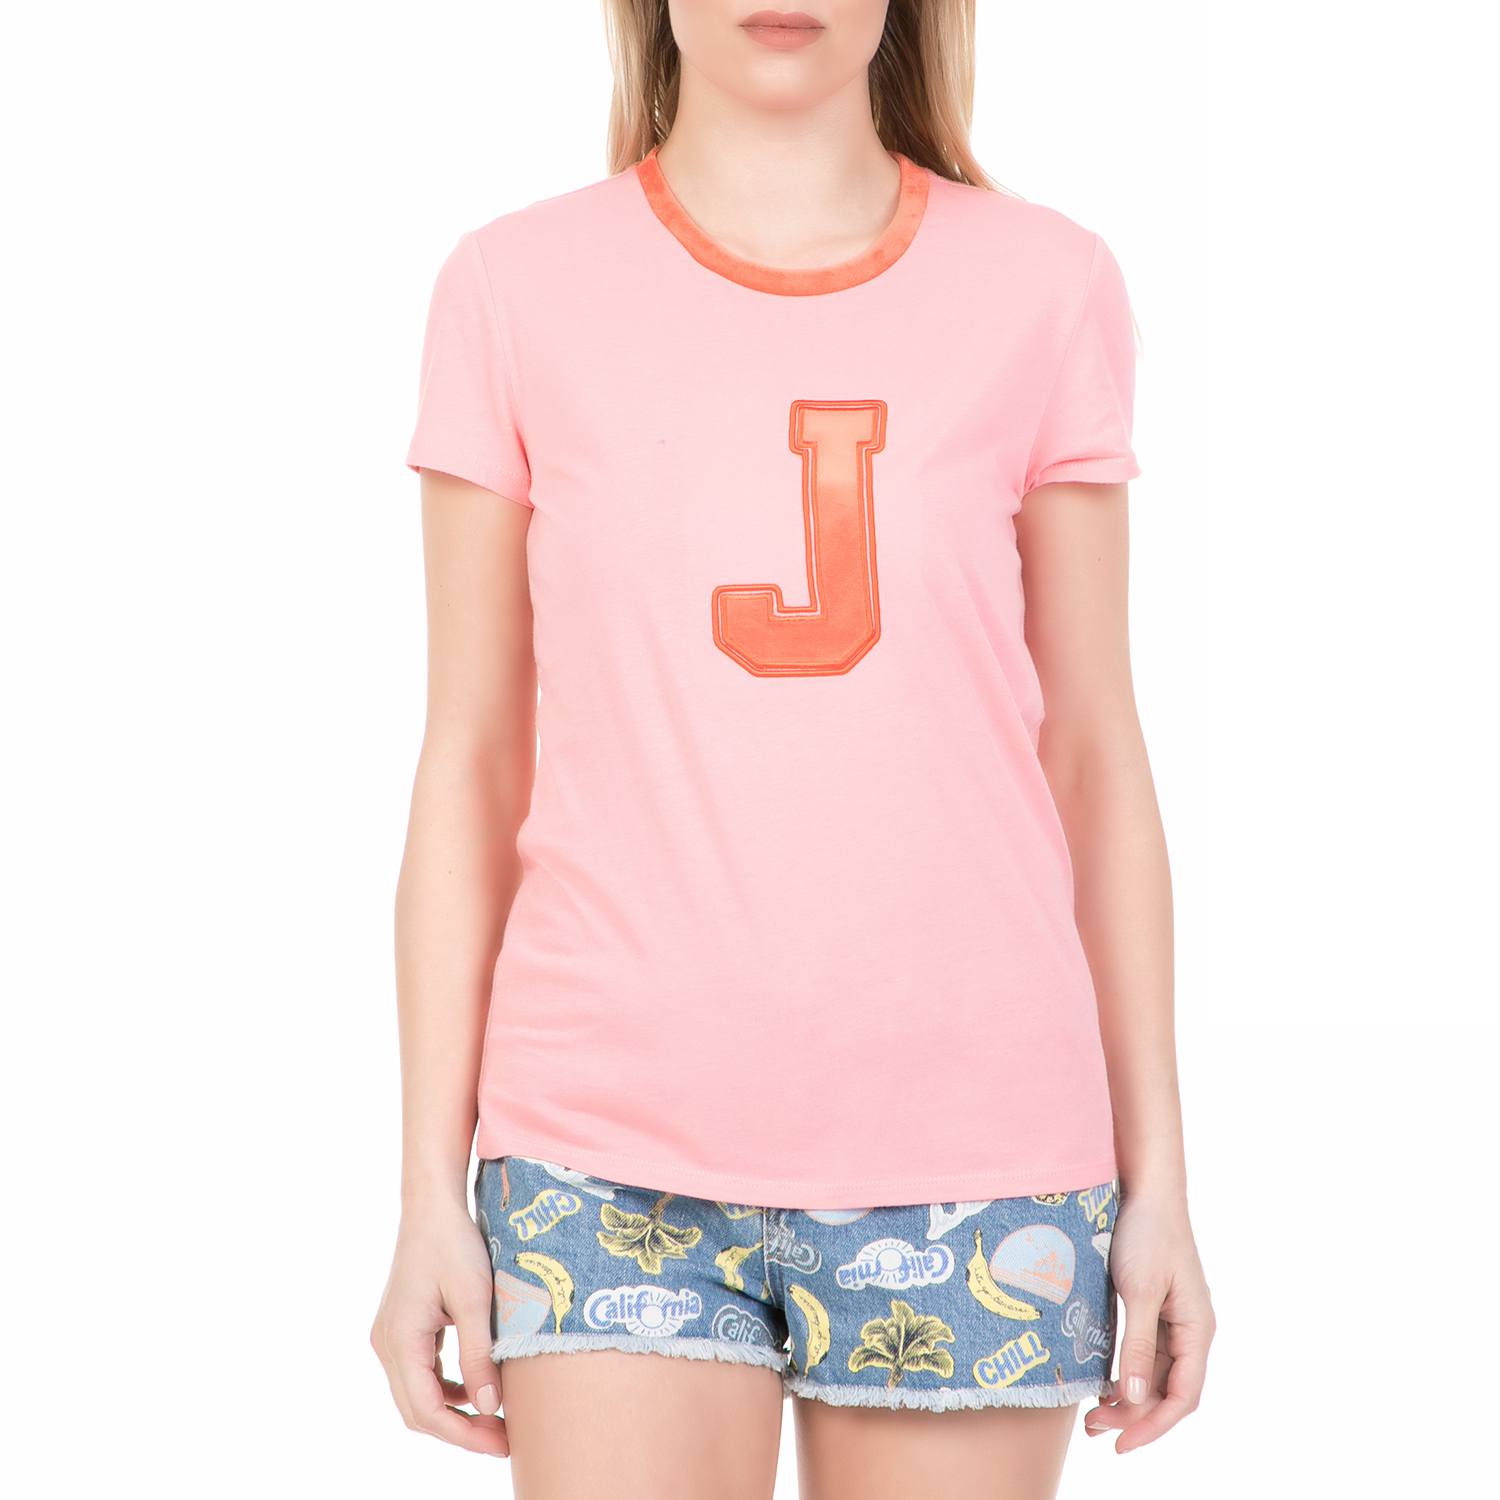 JUICY COUTURE - Γυναικεία κοντομάνικη μπλούζα JUICY COUTURE VELOUR APPLIQUE ροζ Γυναικεία/Ρούχα/Μπλούζες/Κοντομάνικες